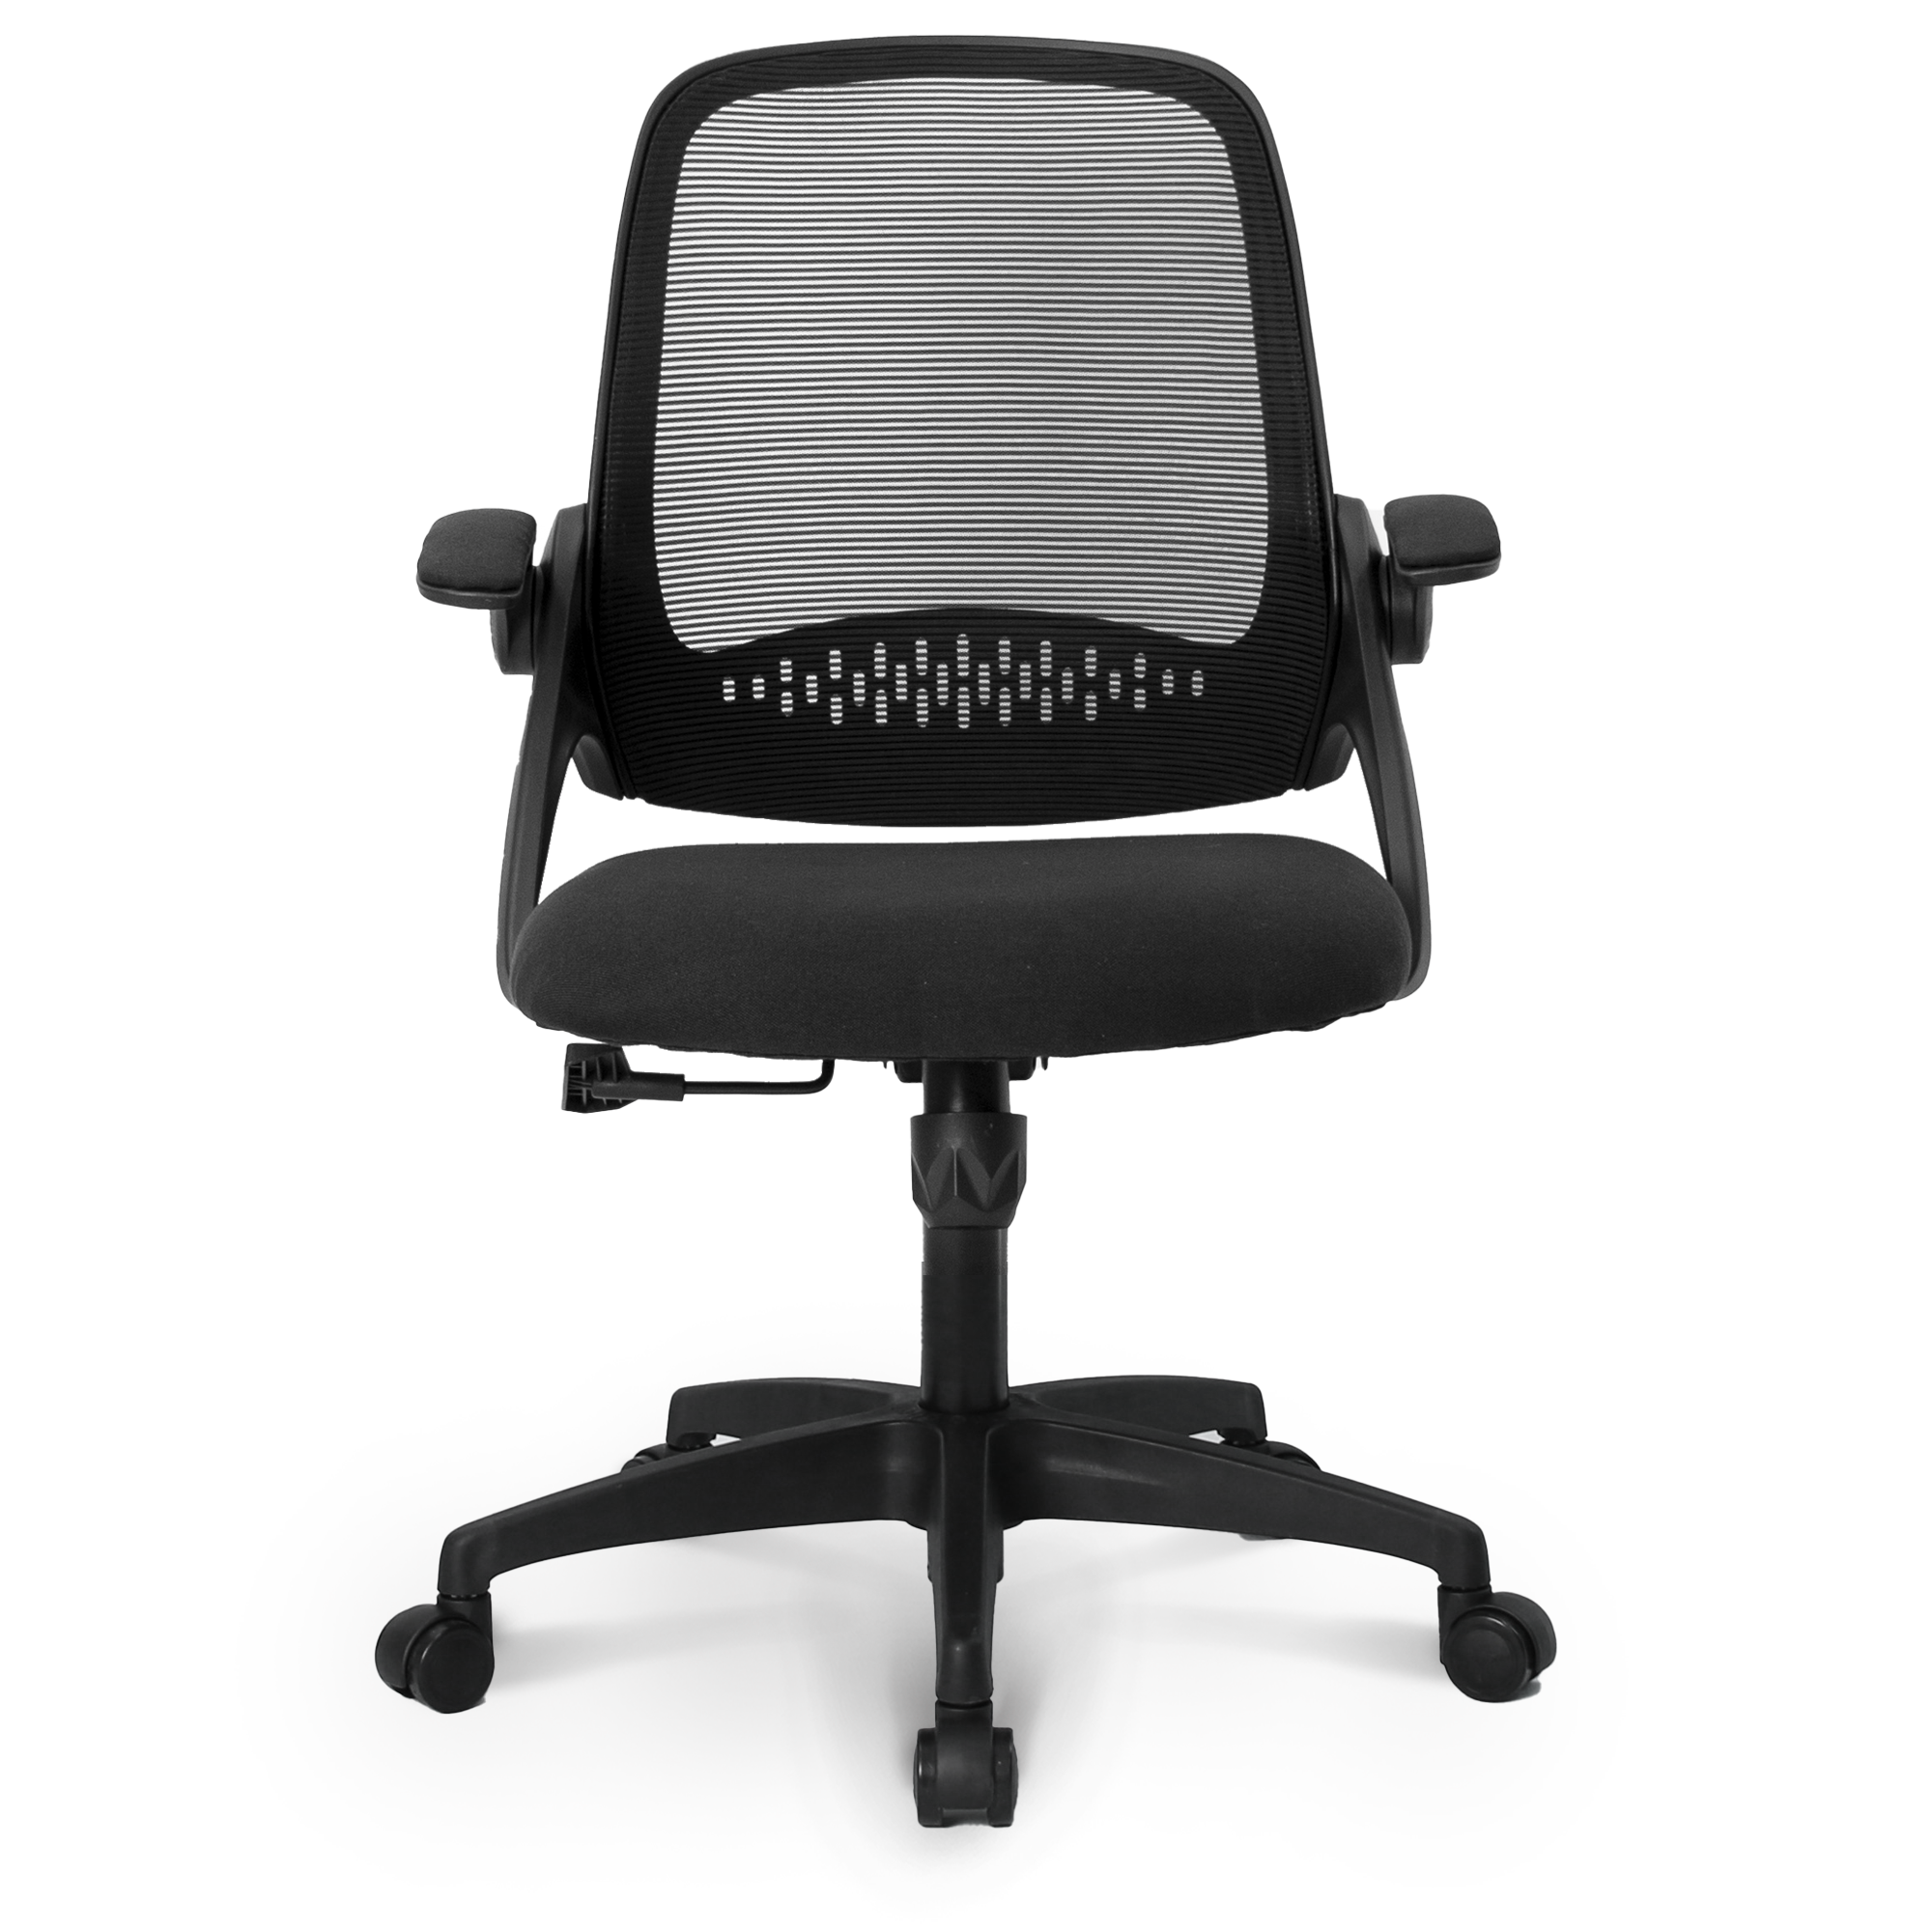 NEC mesh office chair